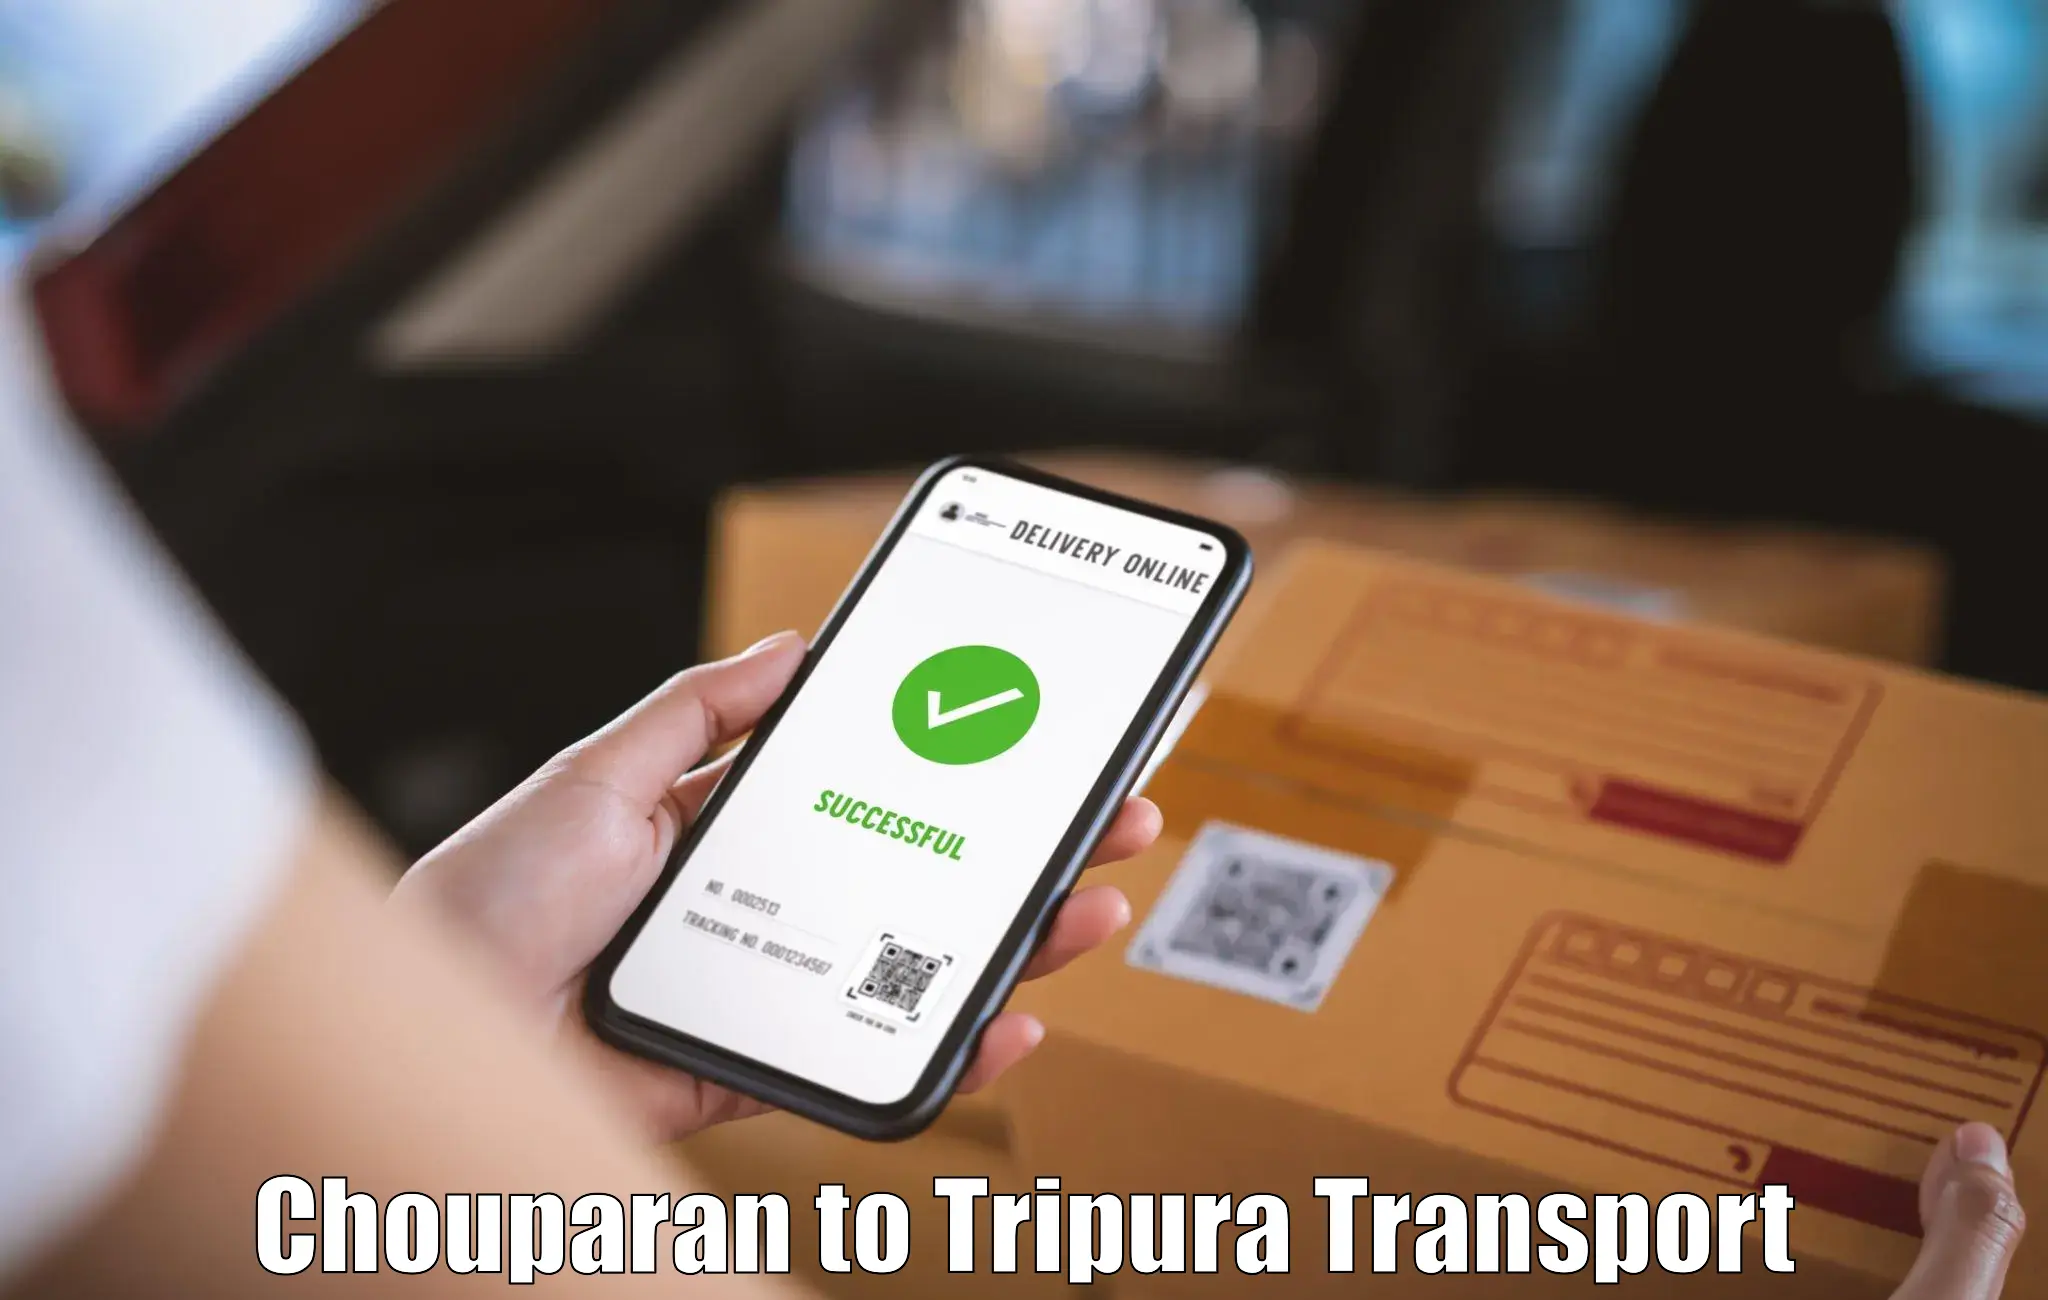 Online transport service Chouparan to Aambasa